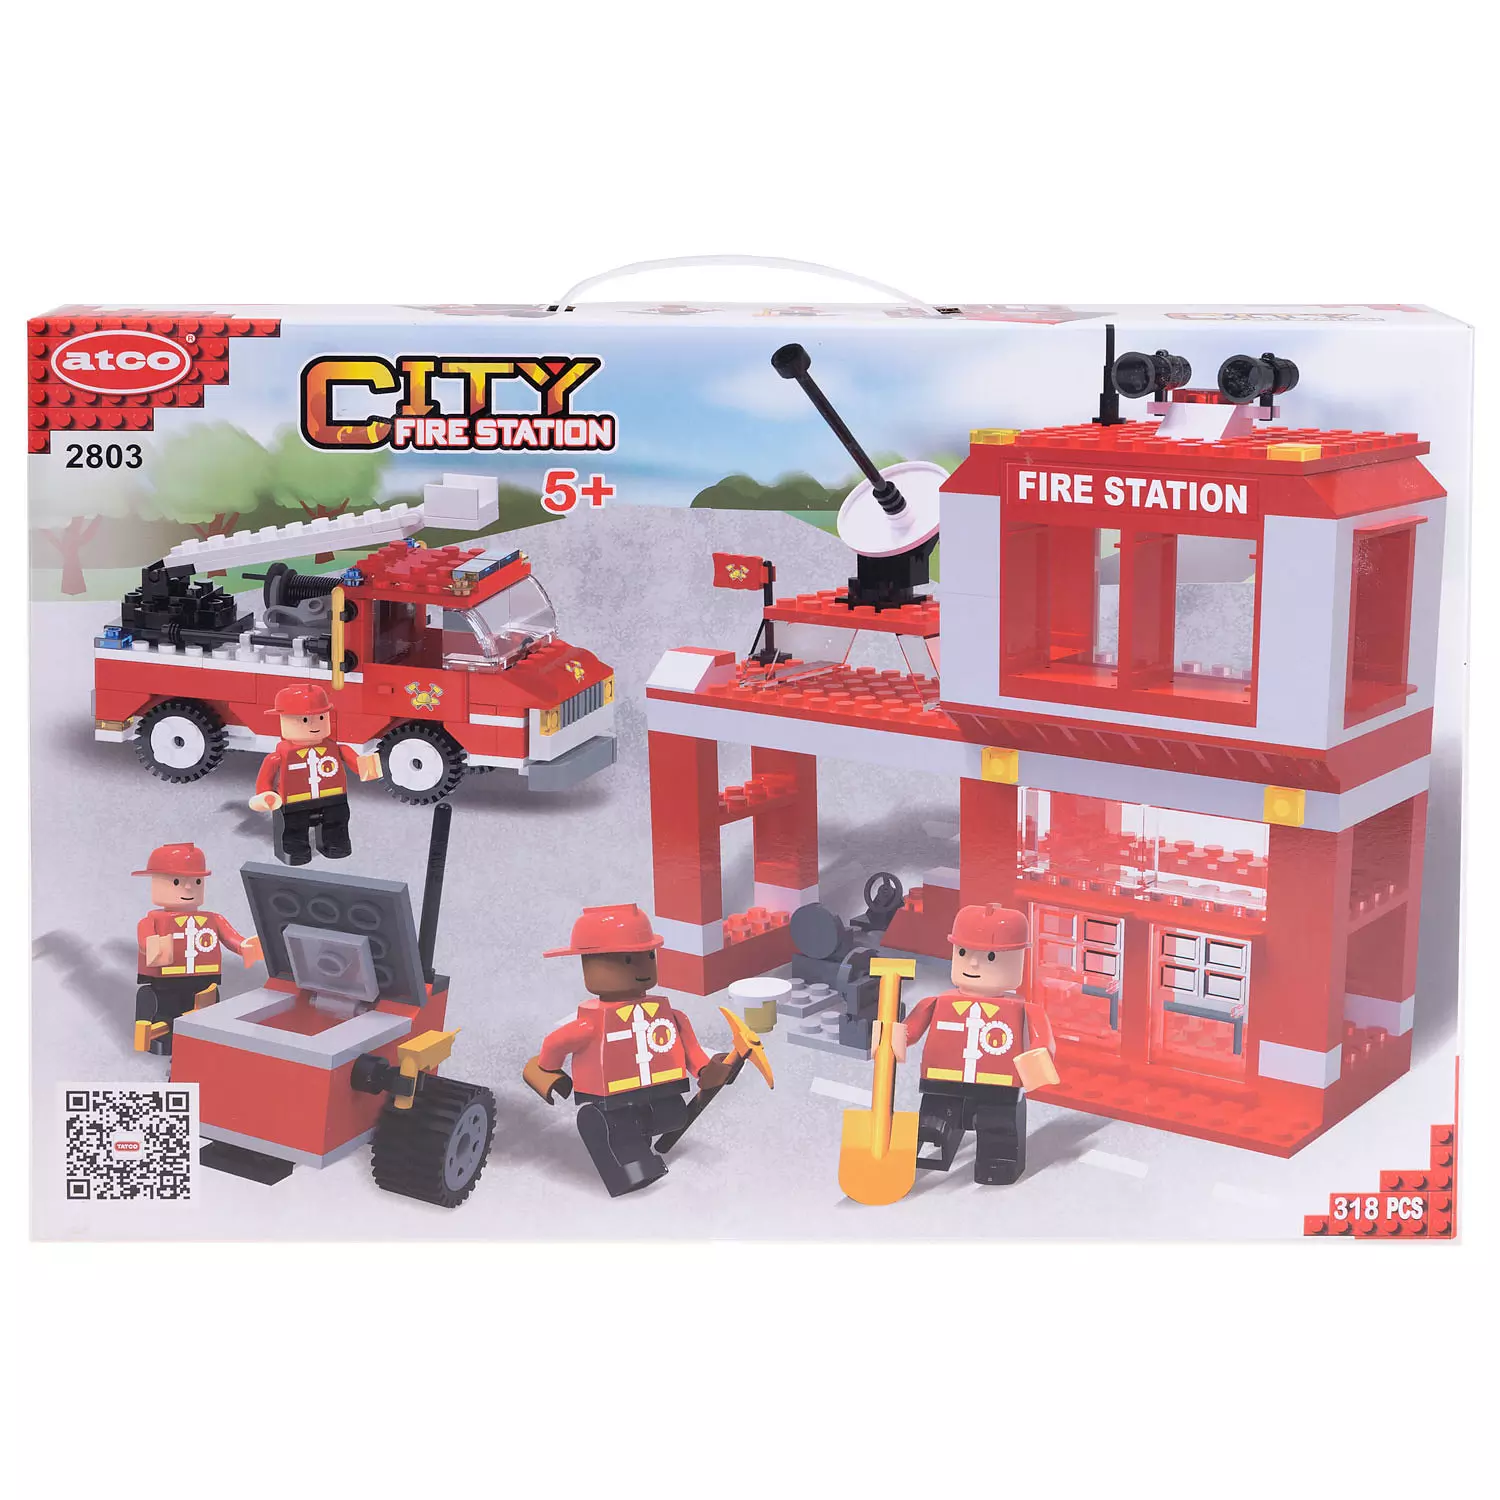 City fire station building blocks, 318pcs